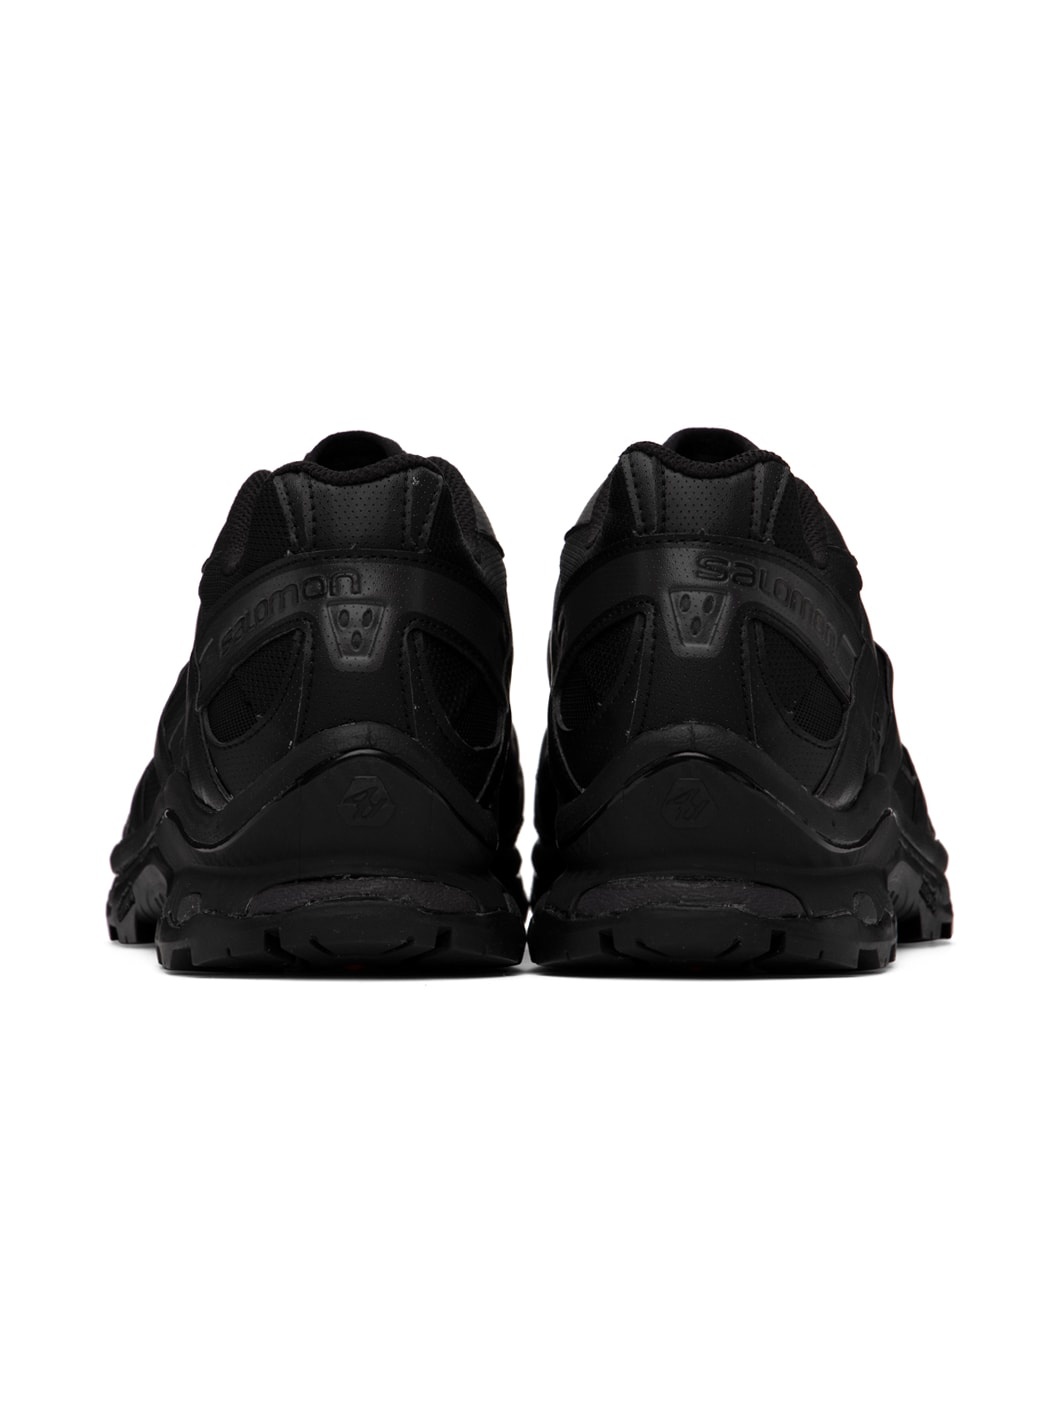 Black XT-Quest Advanced Sneakers - 2